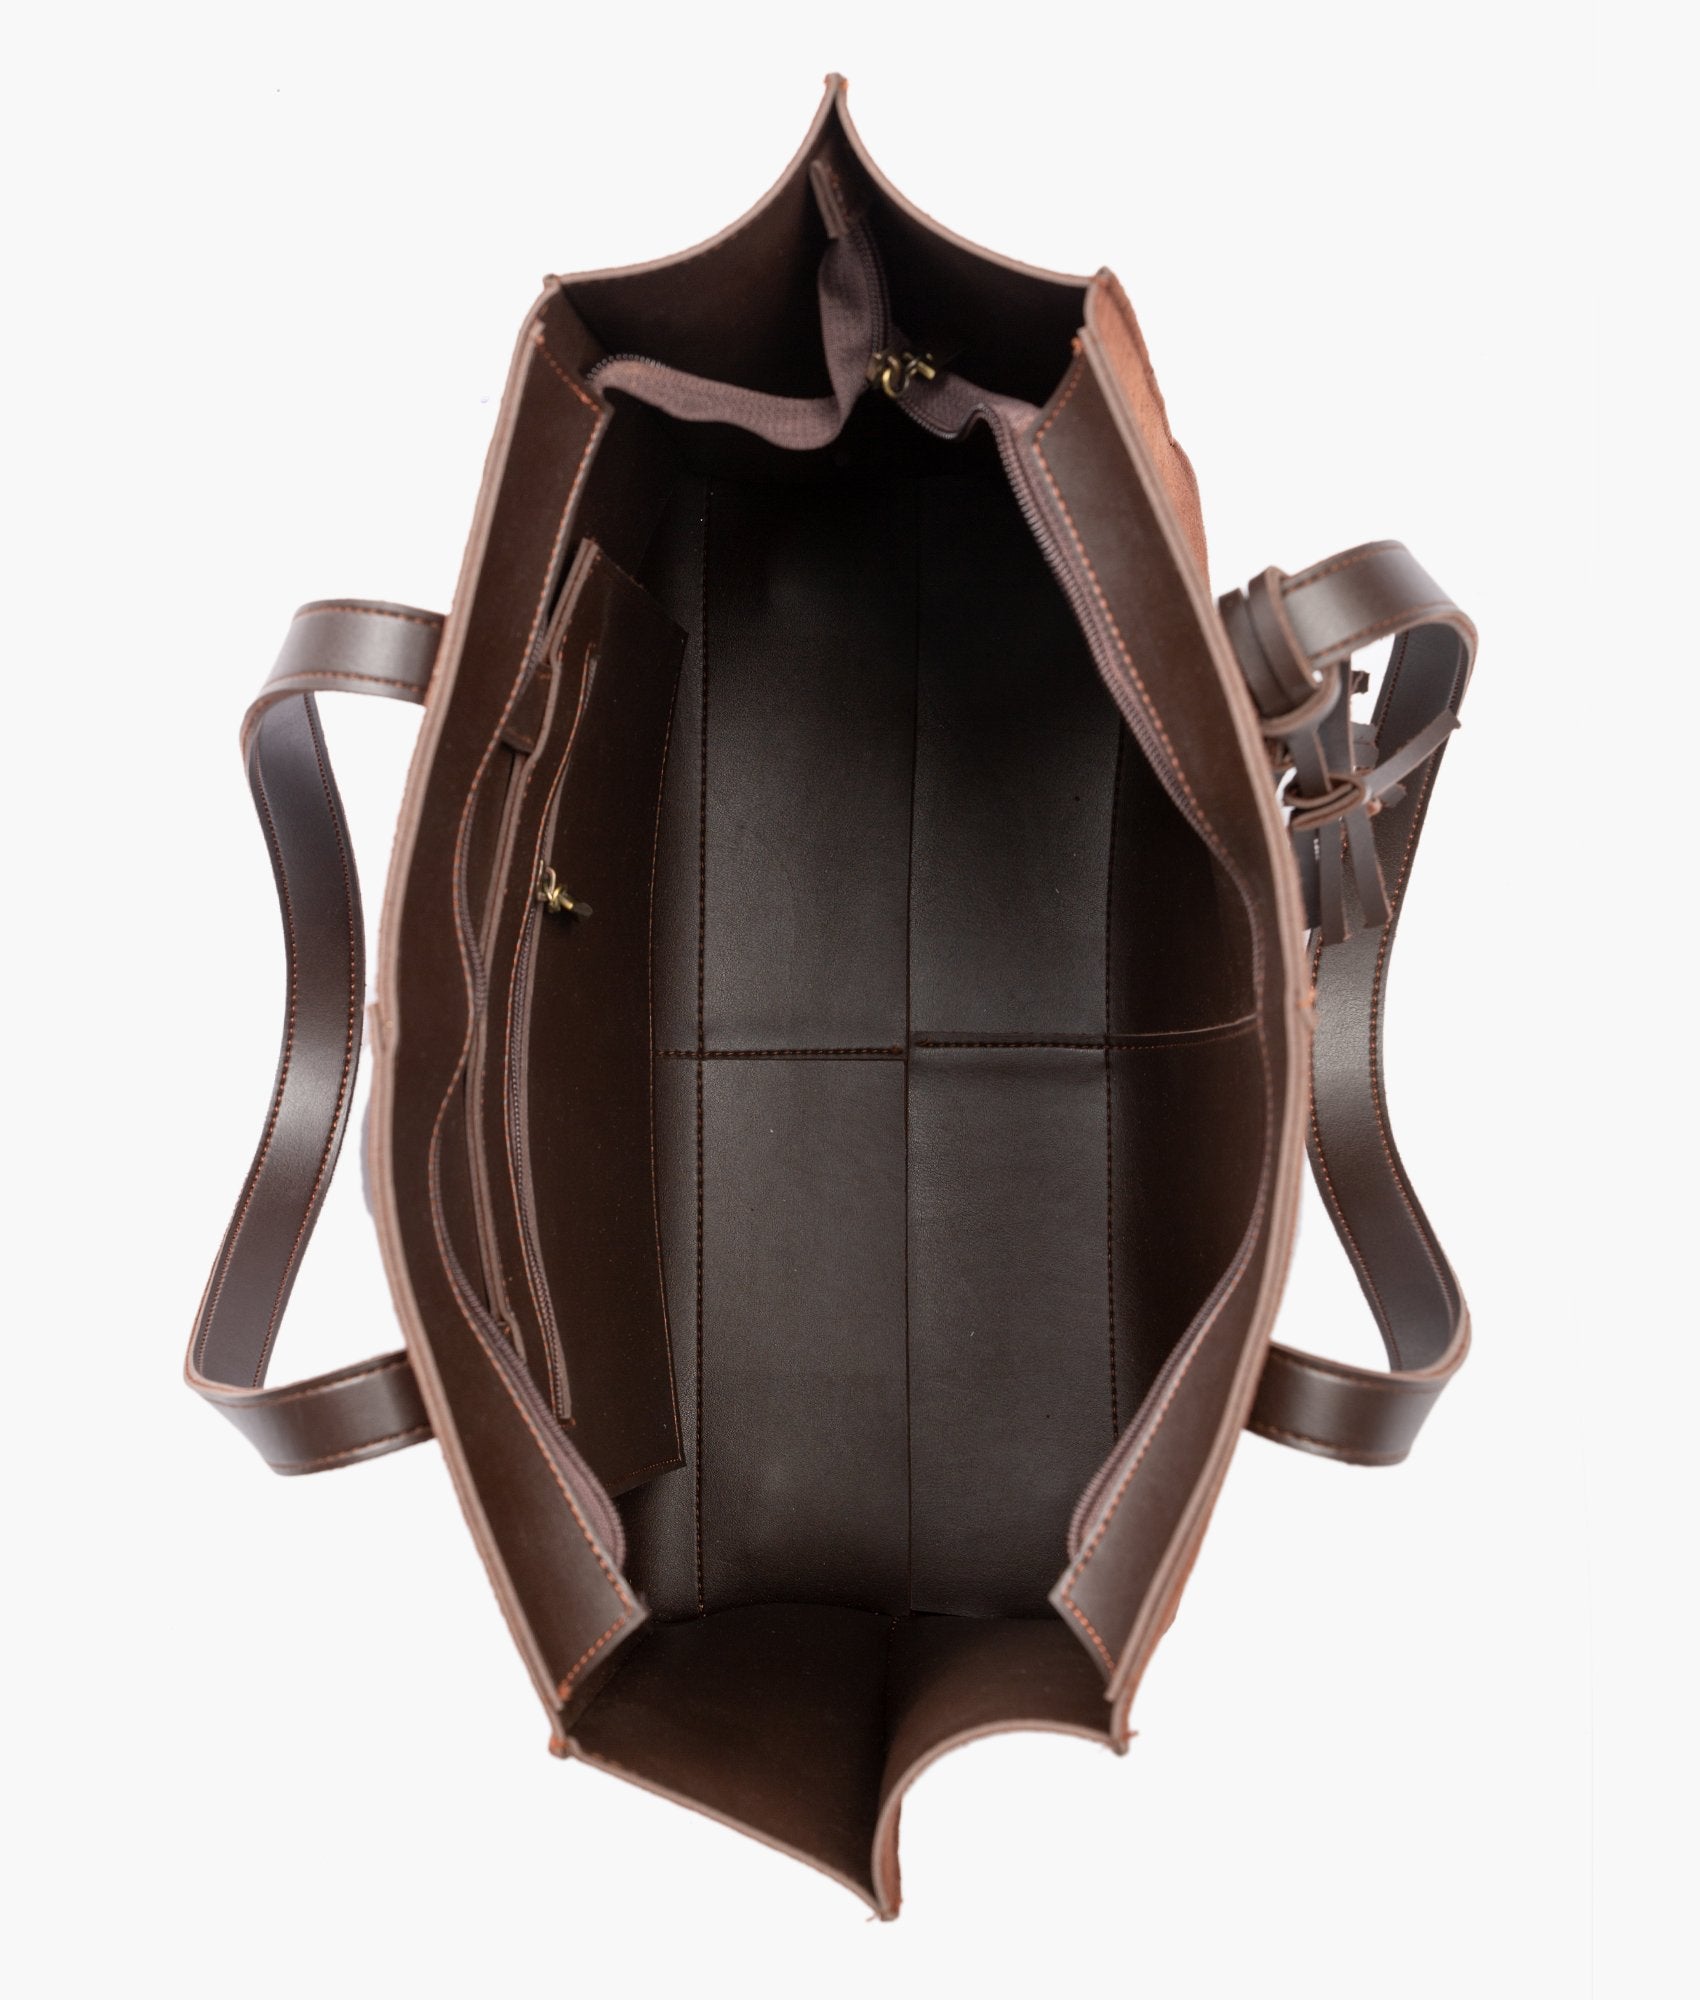 Dark brown suede over the shoulder tote bag